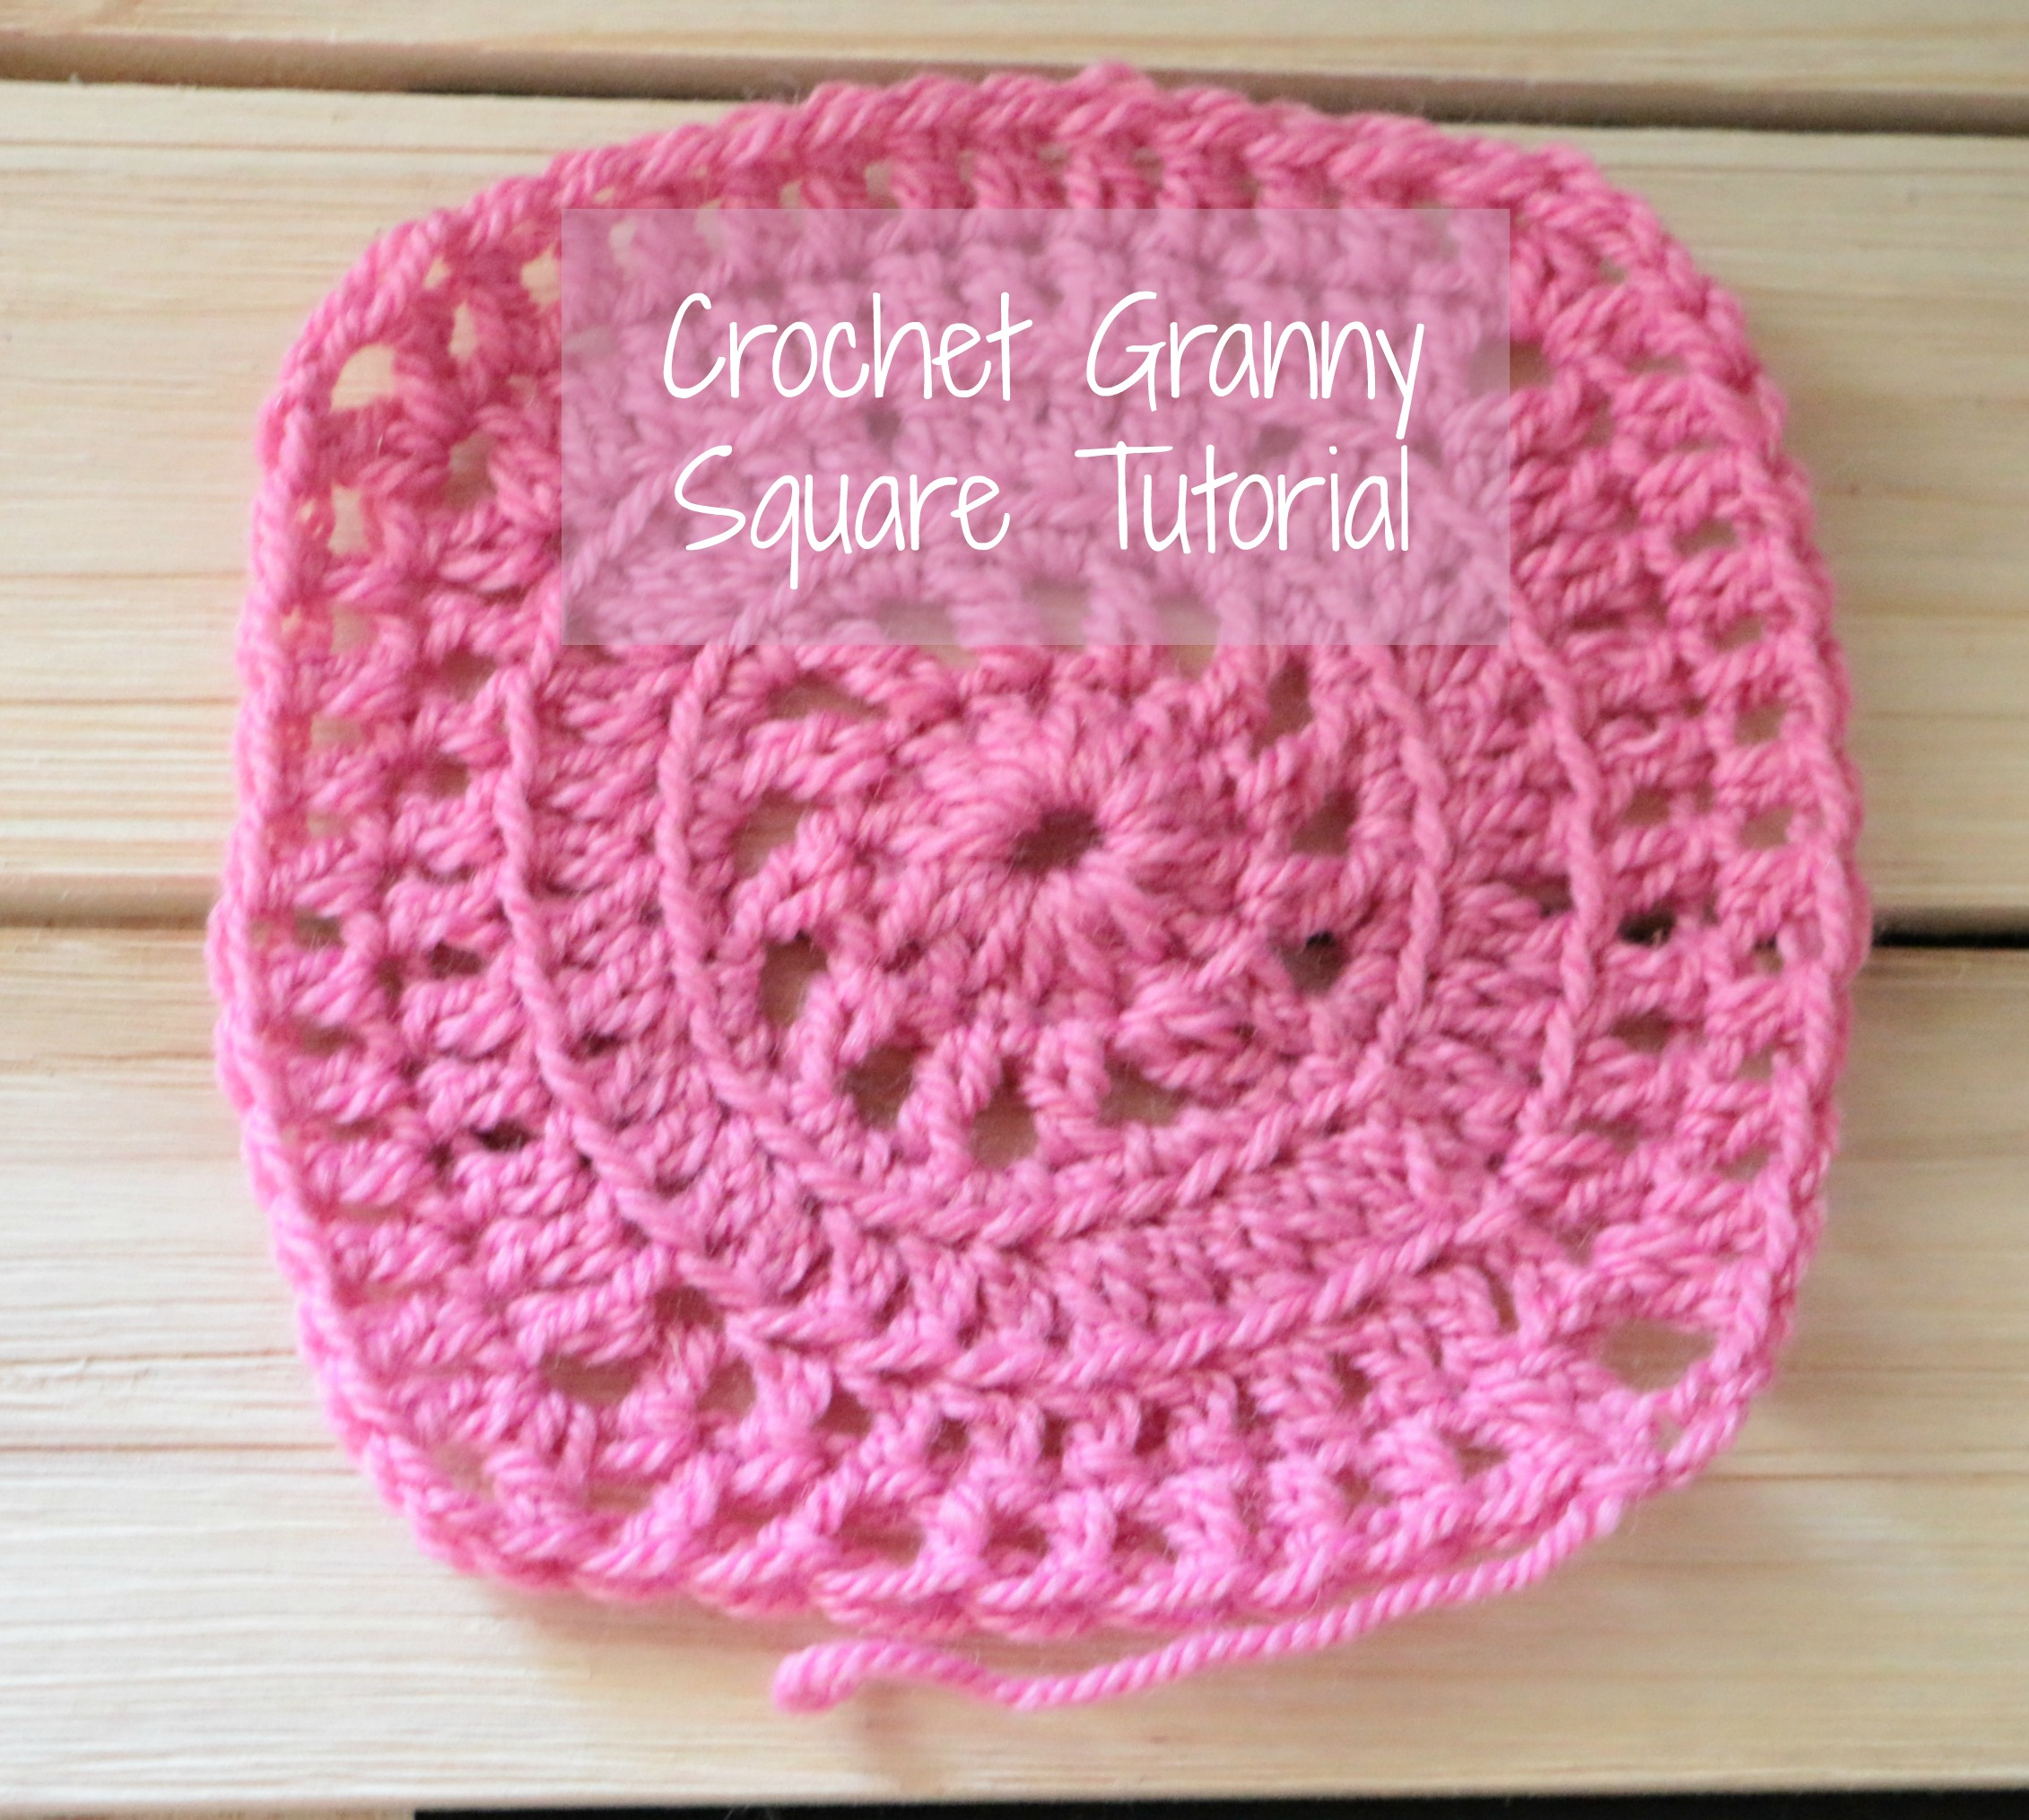 Crochet Granny Square Pattern Crochet Granny Square Tutorial 1001 Knits